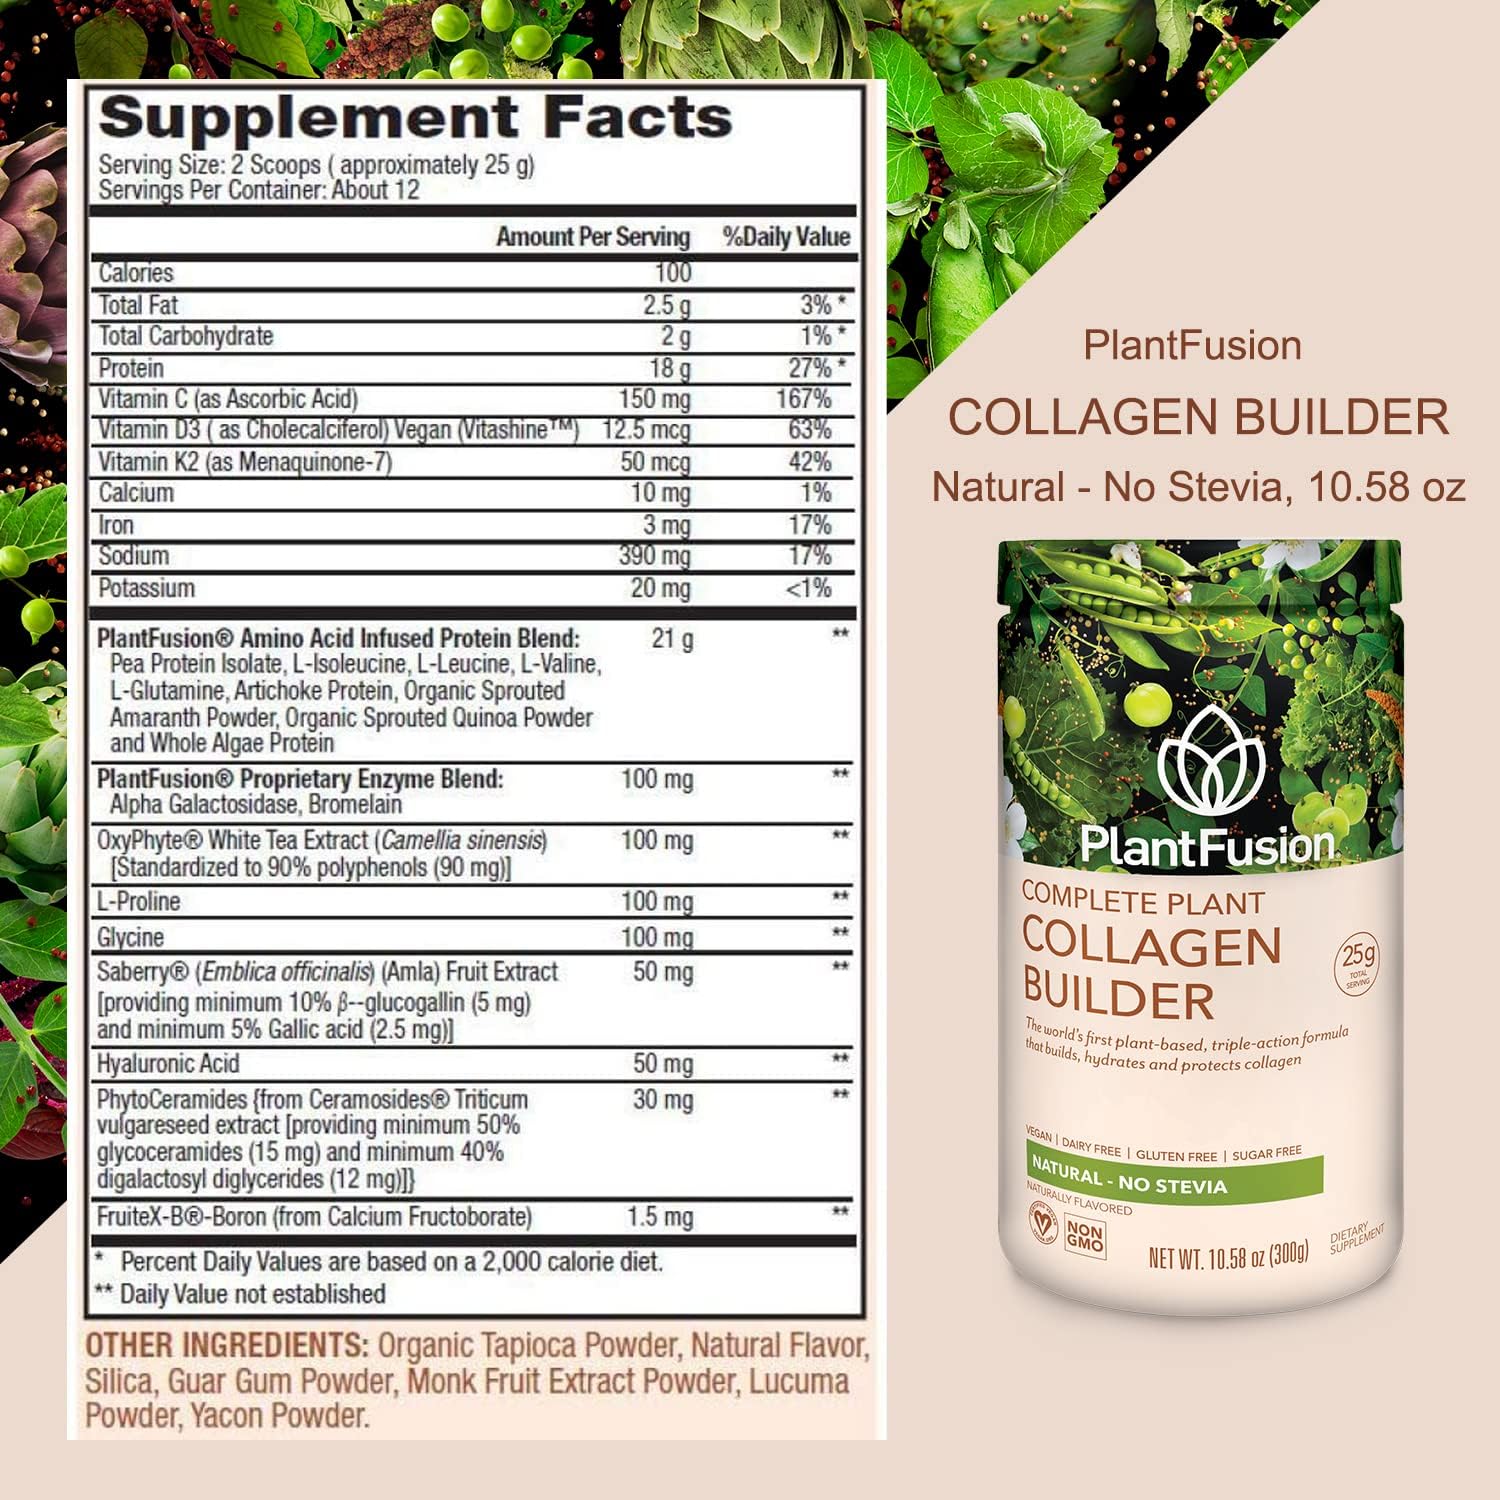 PlantFusion Complete Vegan Protein Powder and Collagen Bundle - Keto, Gluten Free, Soy Free, Non-Dairy, No Sugar, Non-GMO : Health & Household